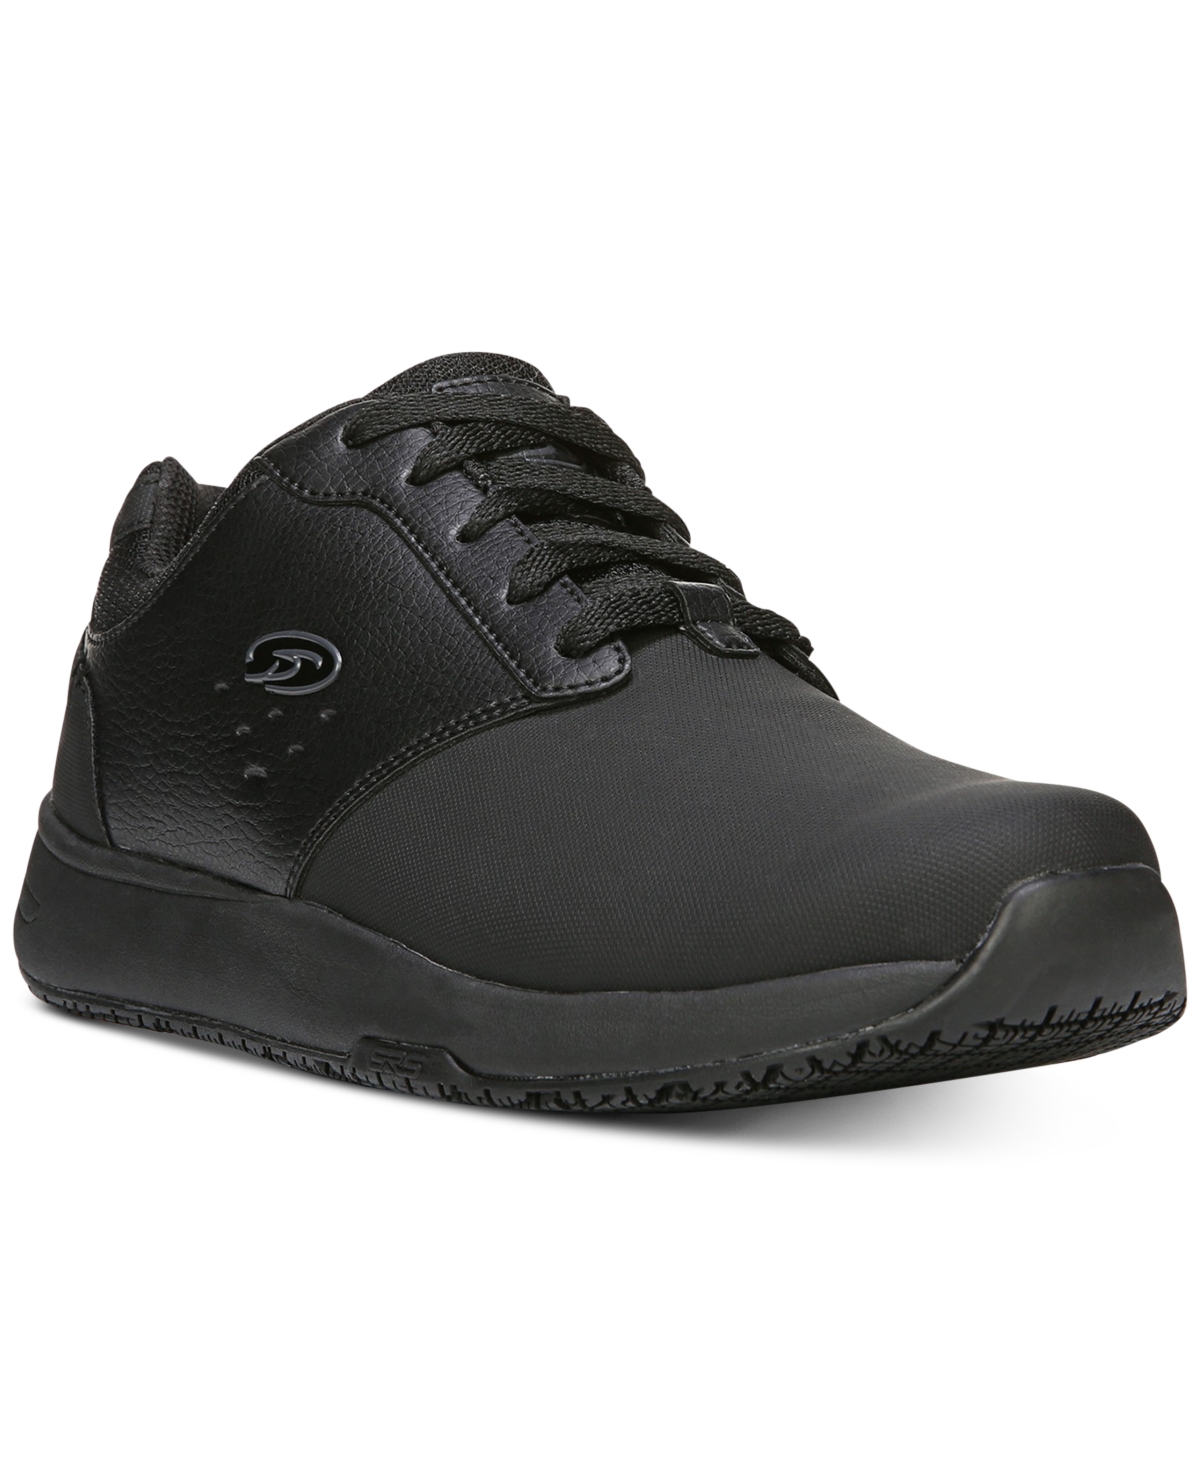 Men's Intrepid Oil & Slip Resistant Sneakers - Black